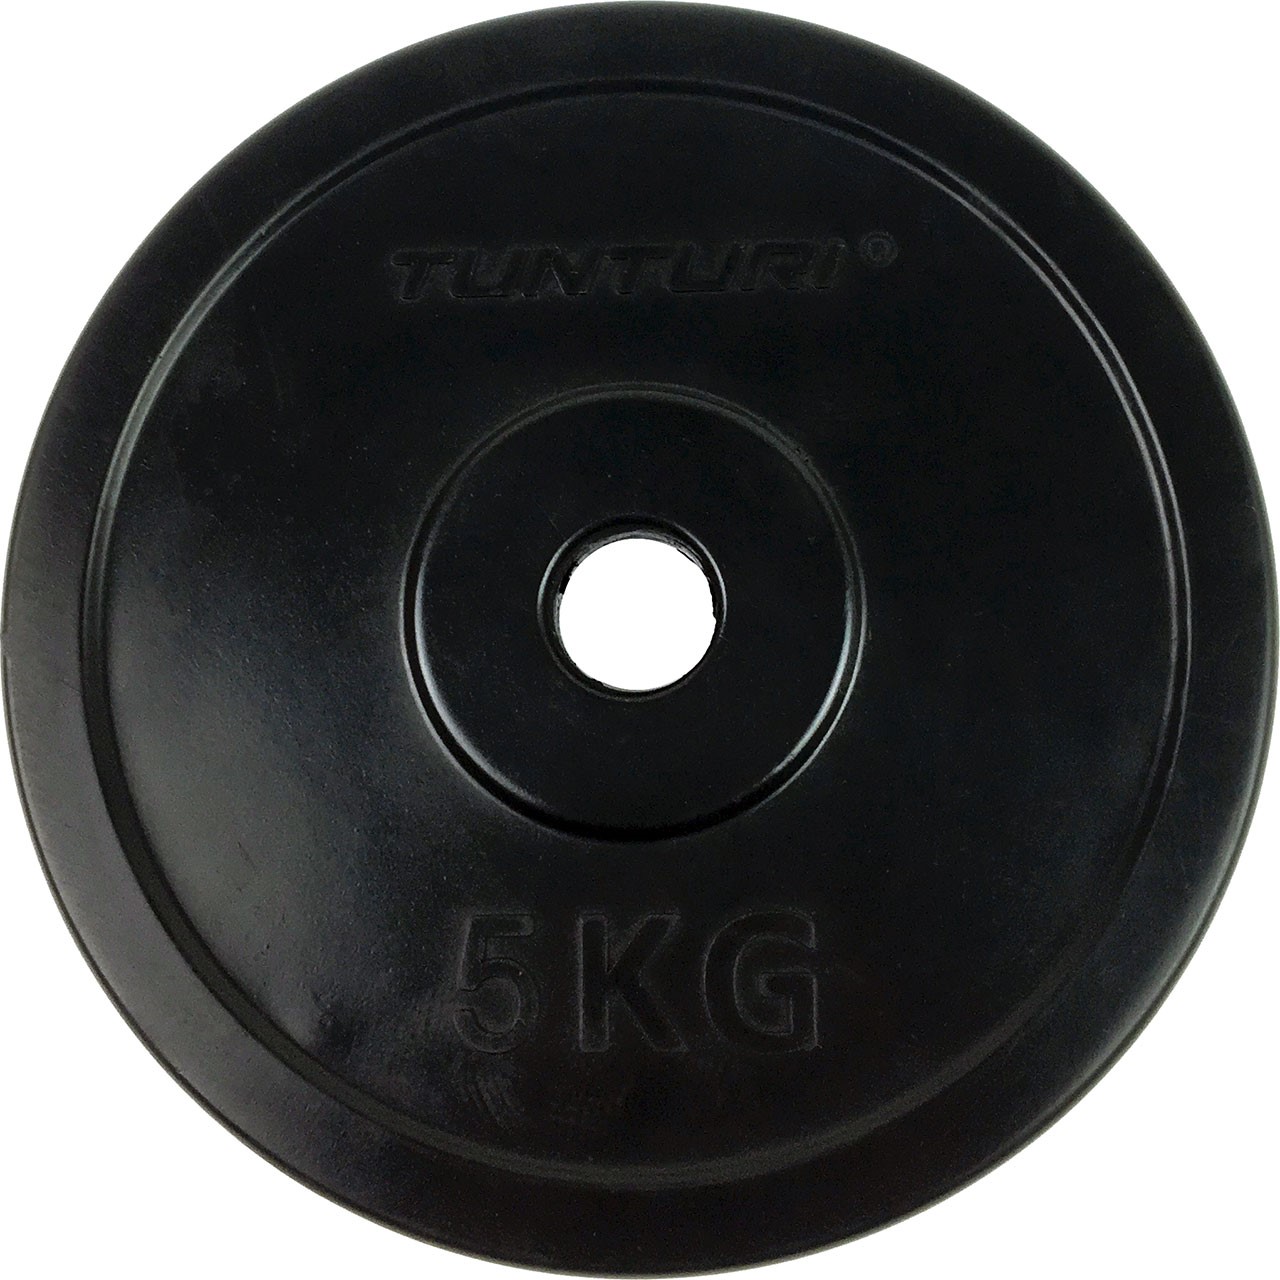 Rubber Coated 5 kg Tunturi Weight Disc 30 mm